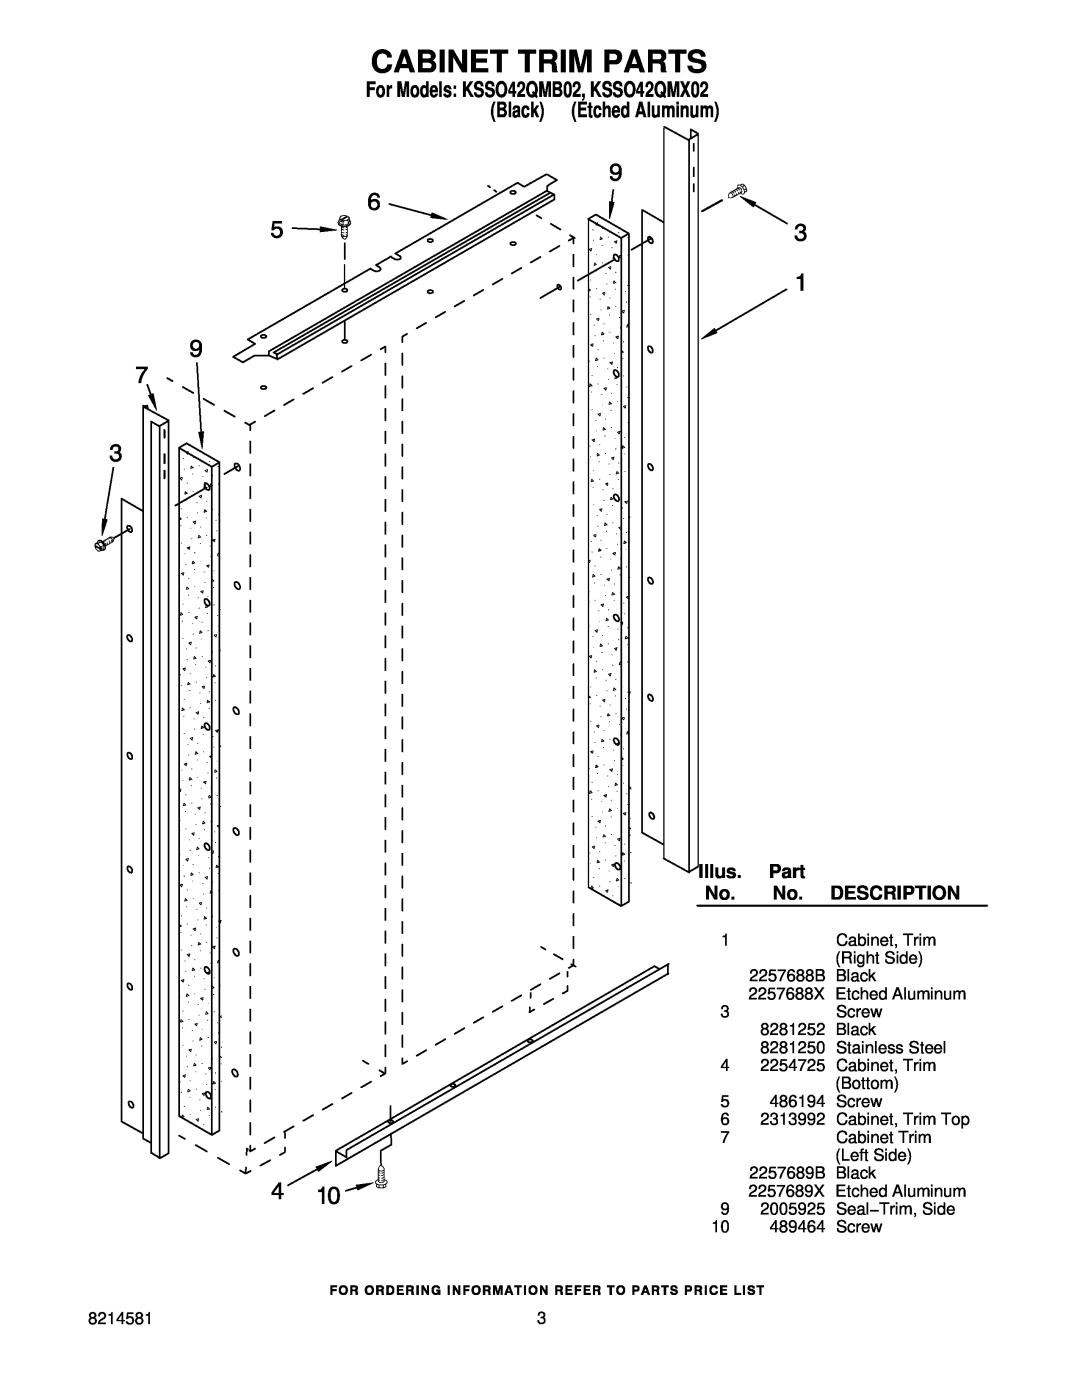 KitchenAid manual Cabinet Trim Parts, For Models KSSO42QMB02, KSSO42QMX02 Black Etched Aluminum, Illus, Description 